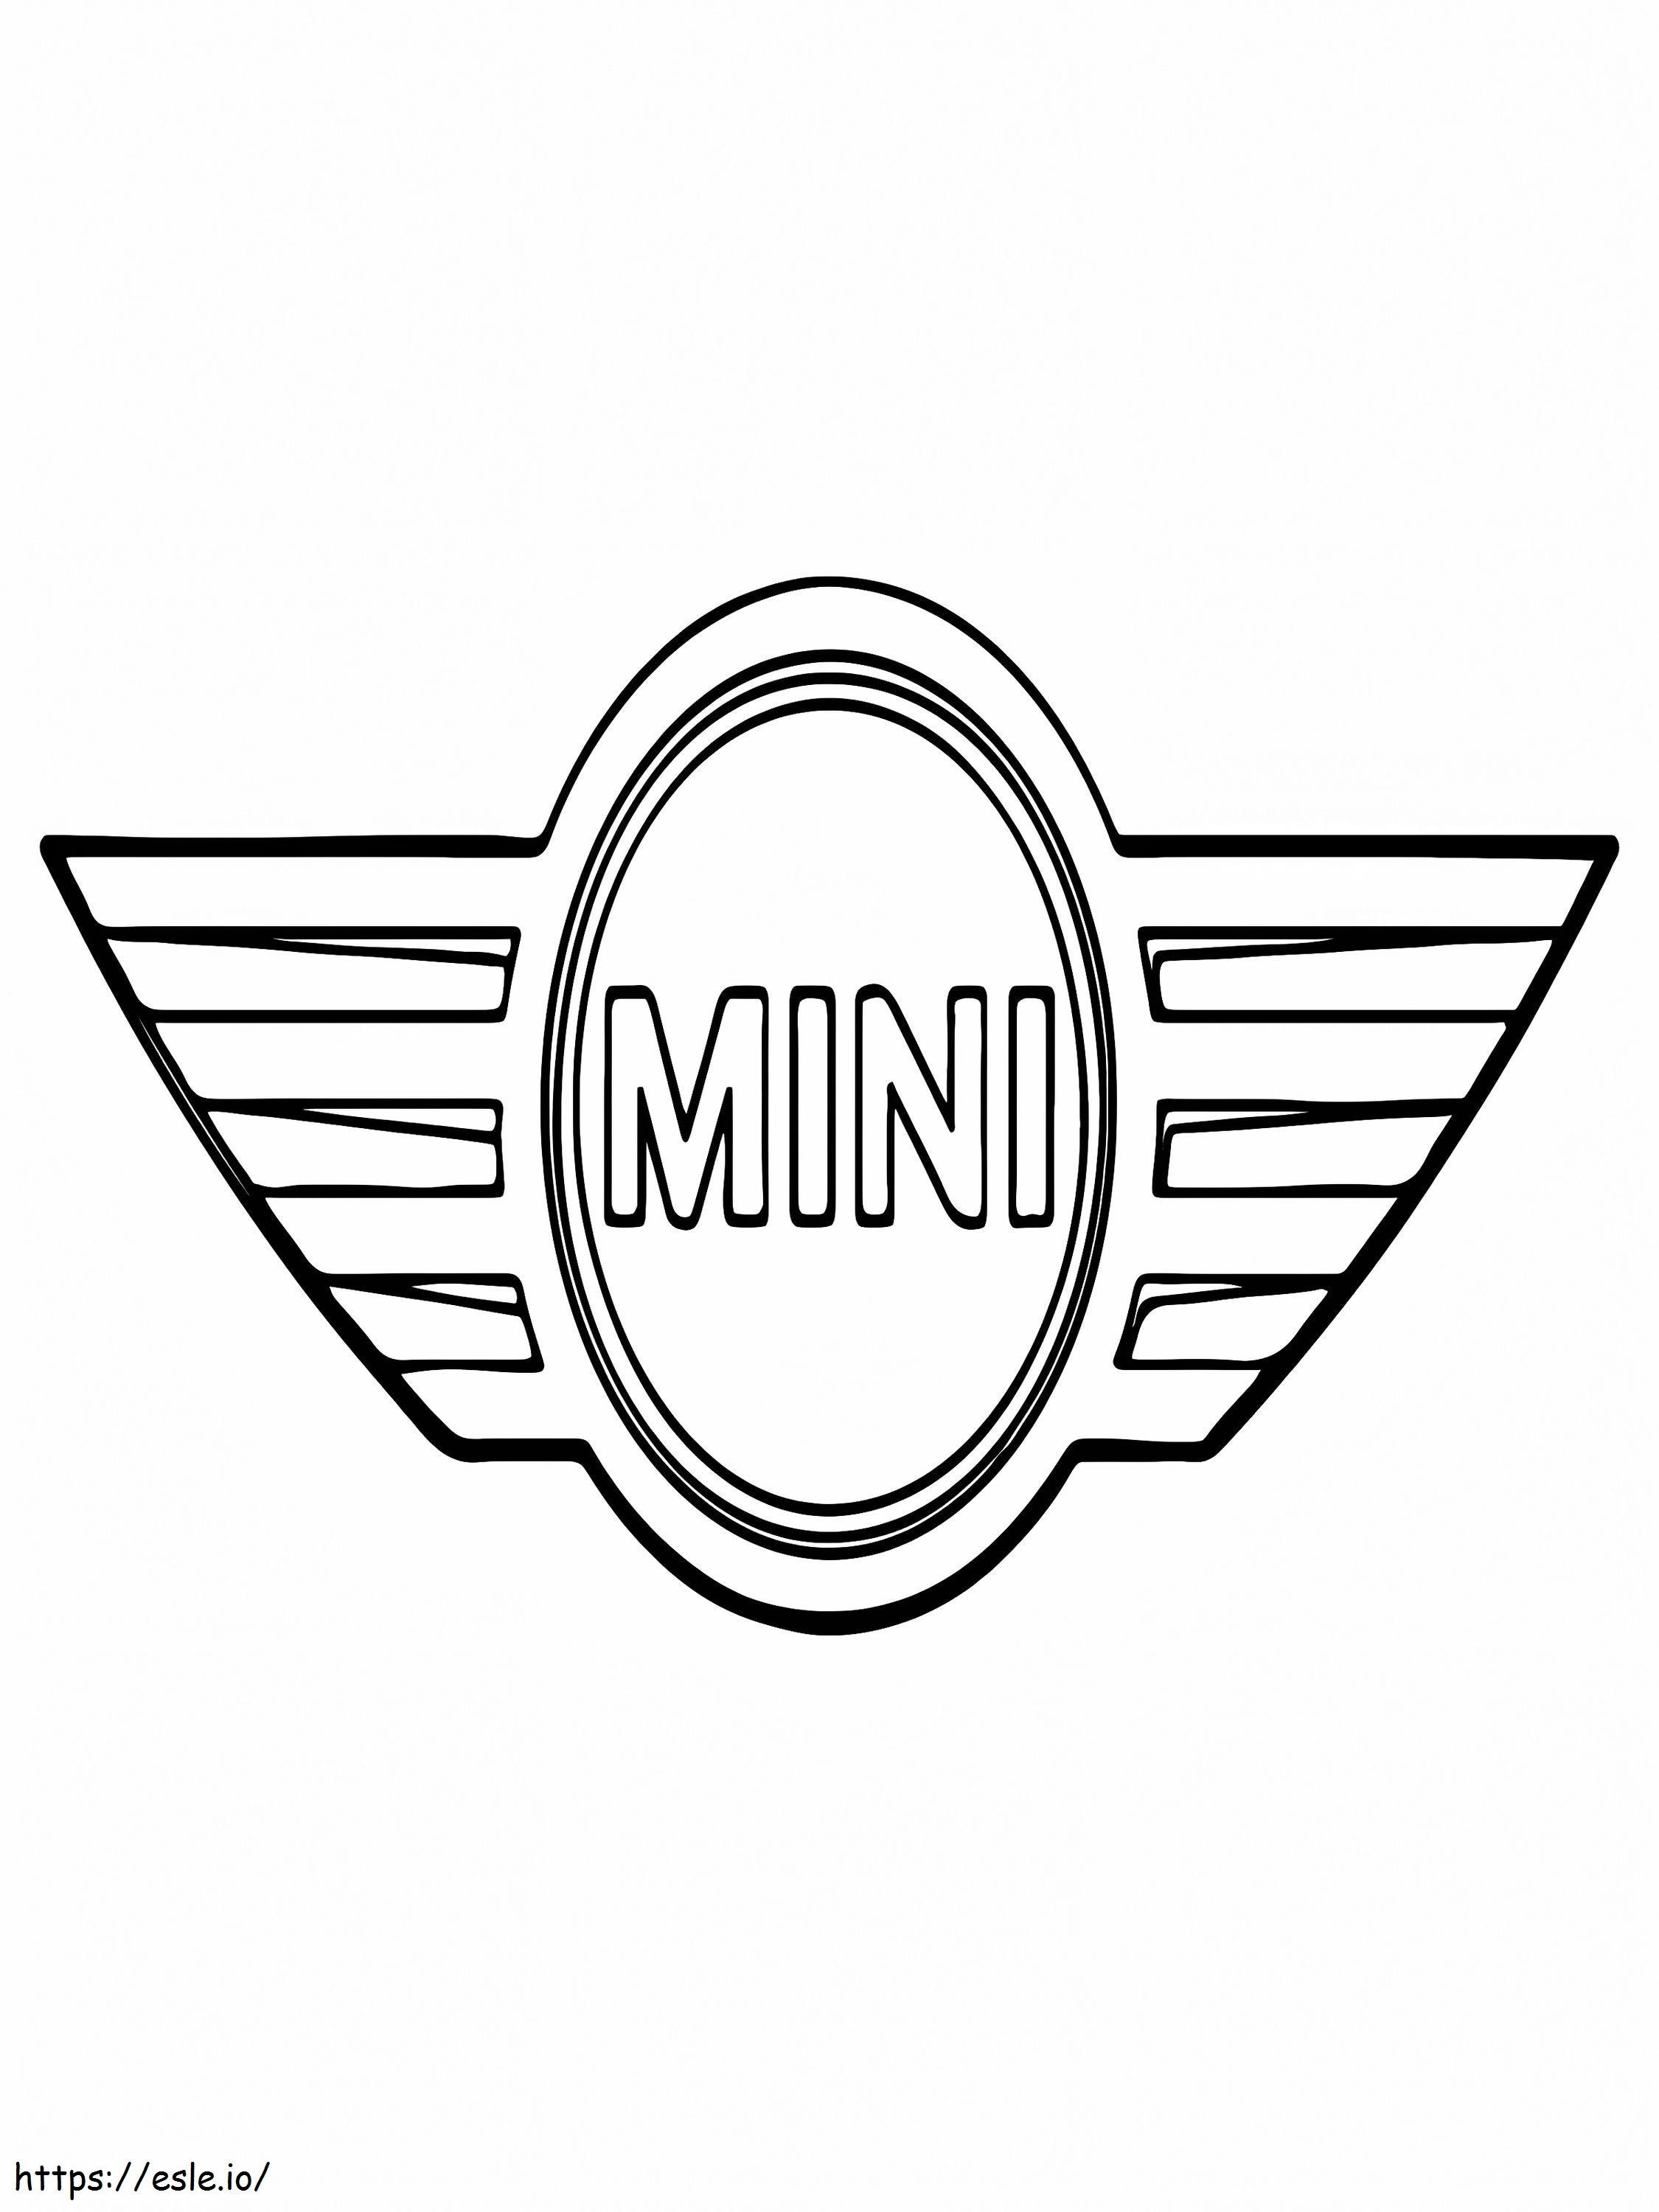 Mini Car Logo coloring page